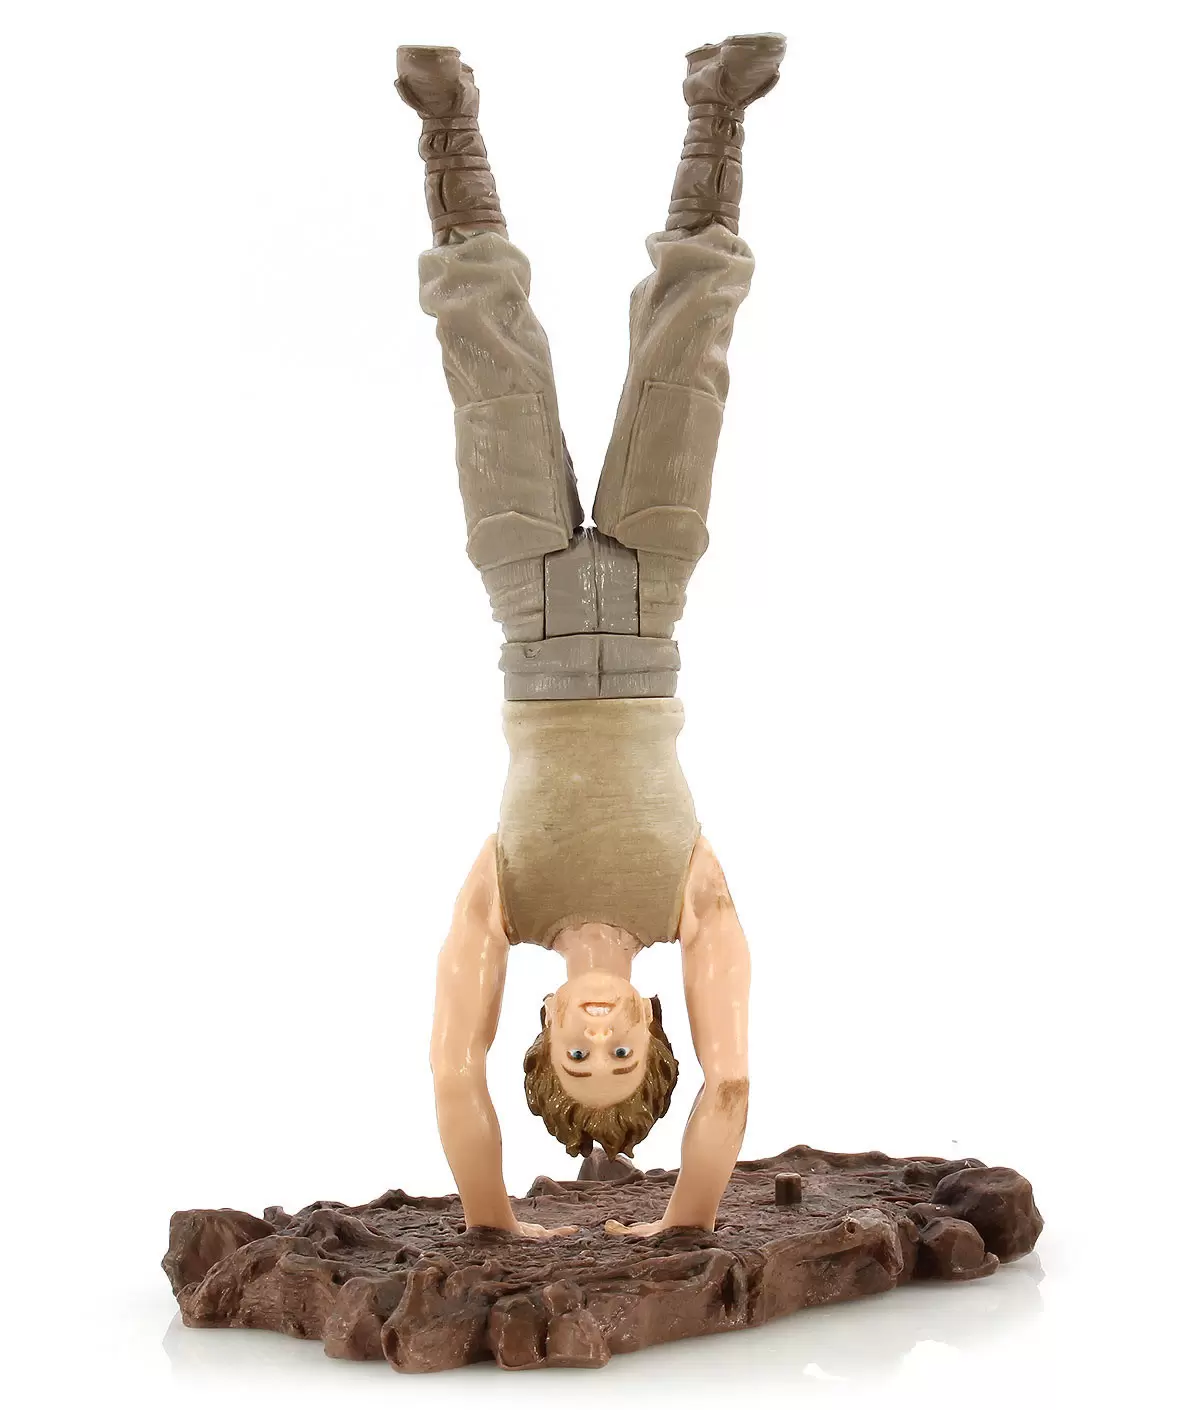 The Original Trilogy Collection (OTC) - Luke Skywalker (Handstand)